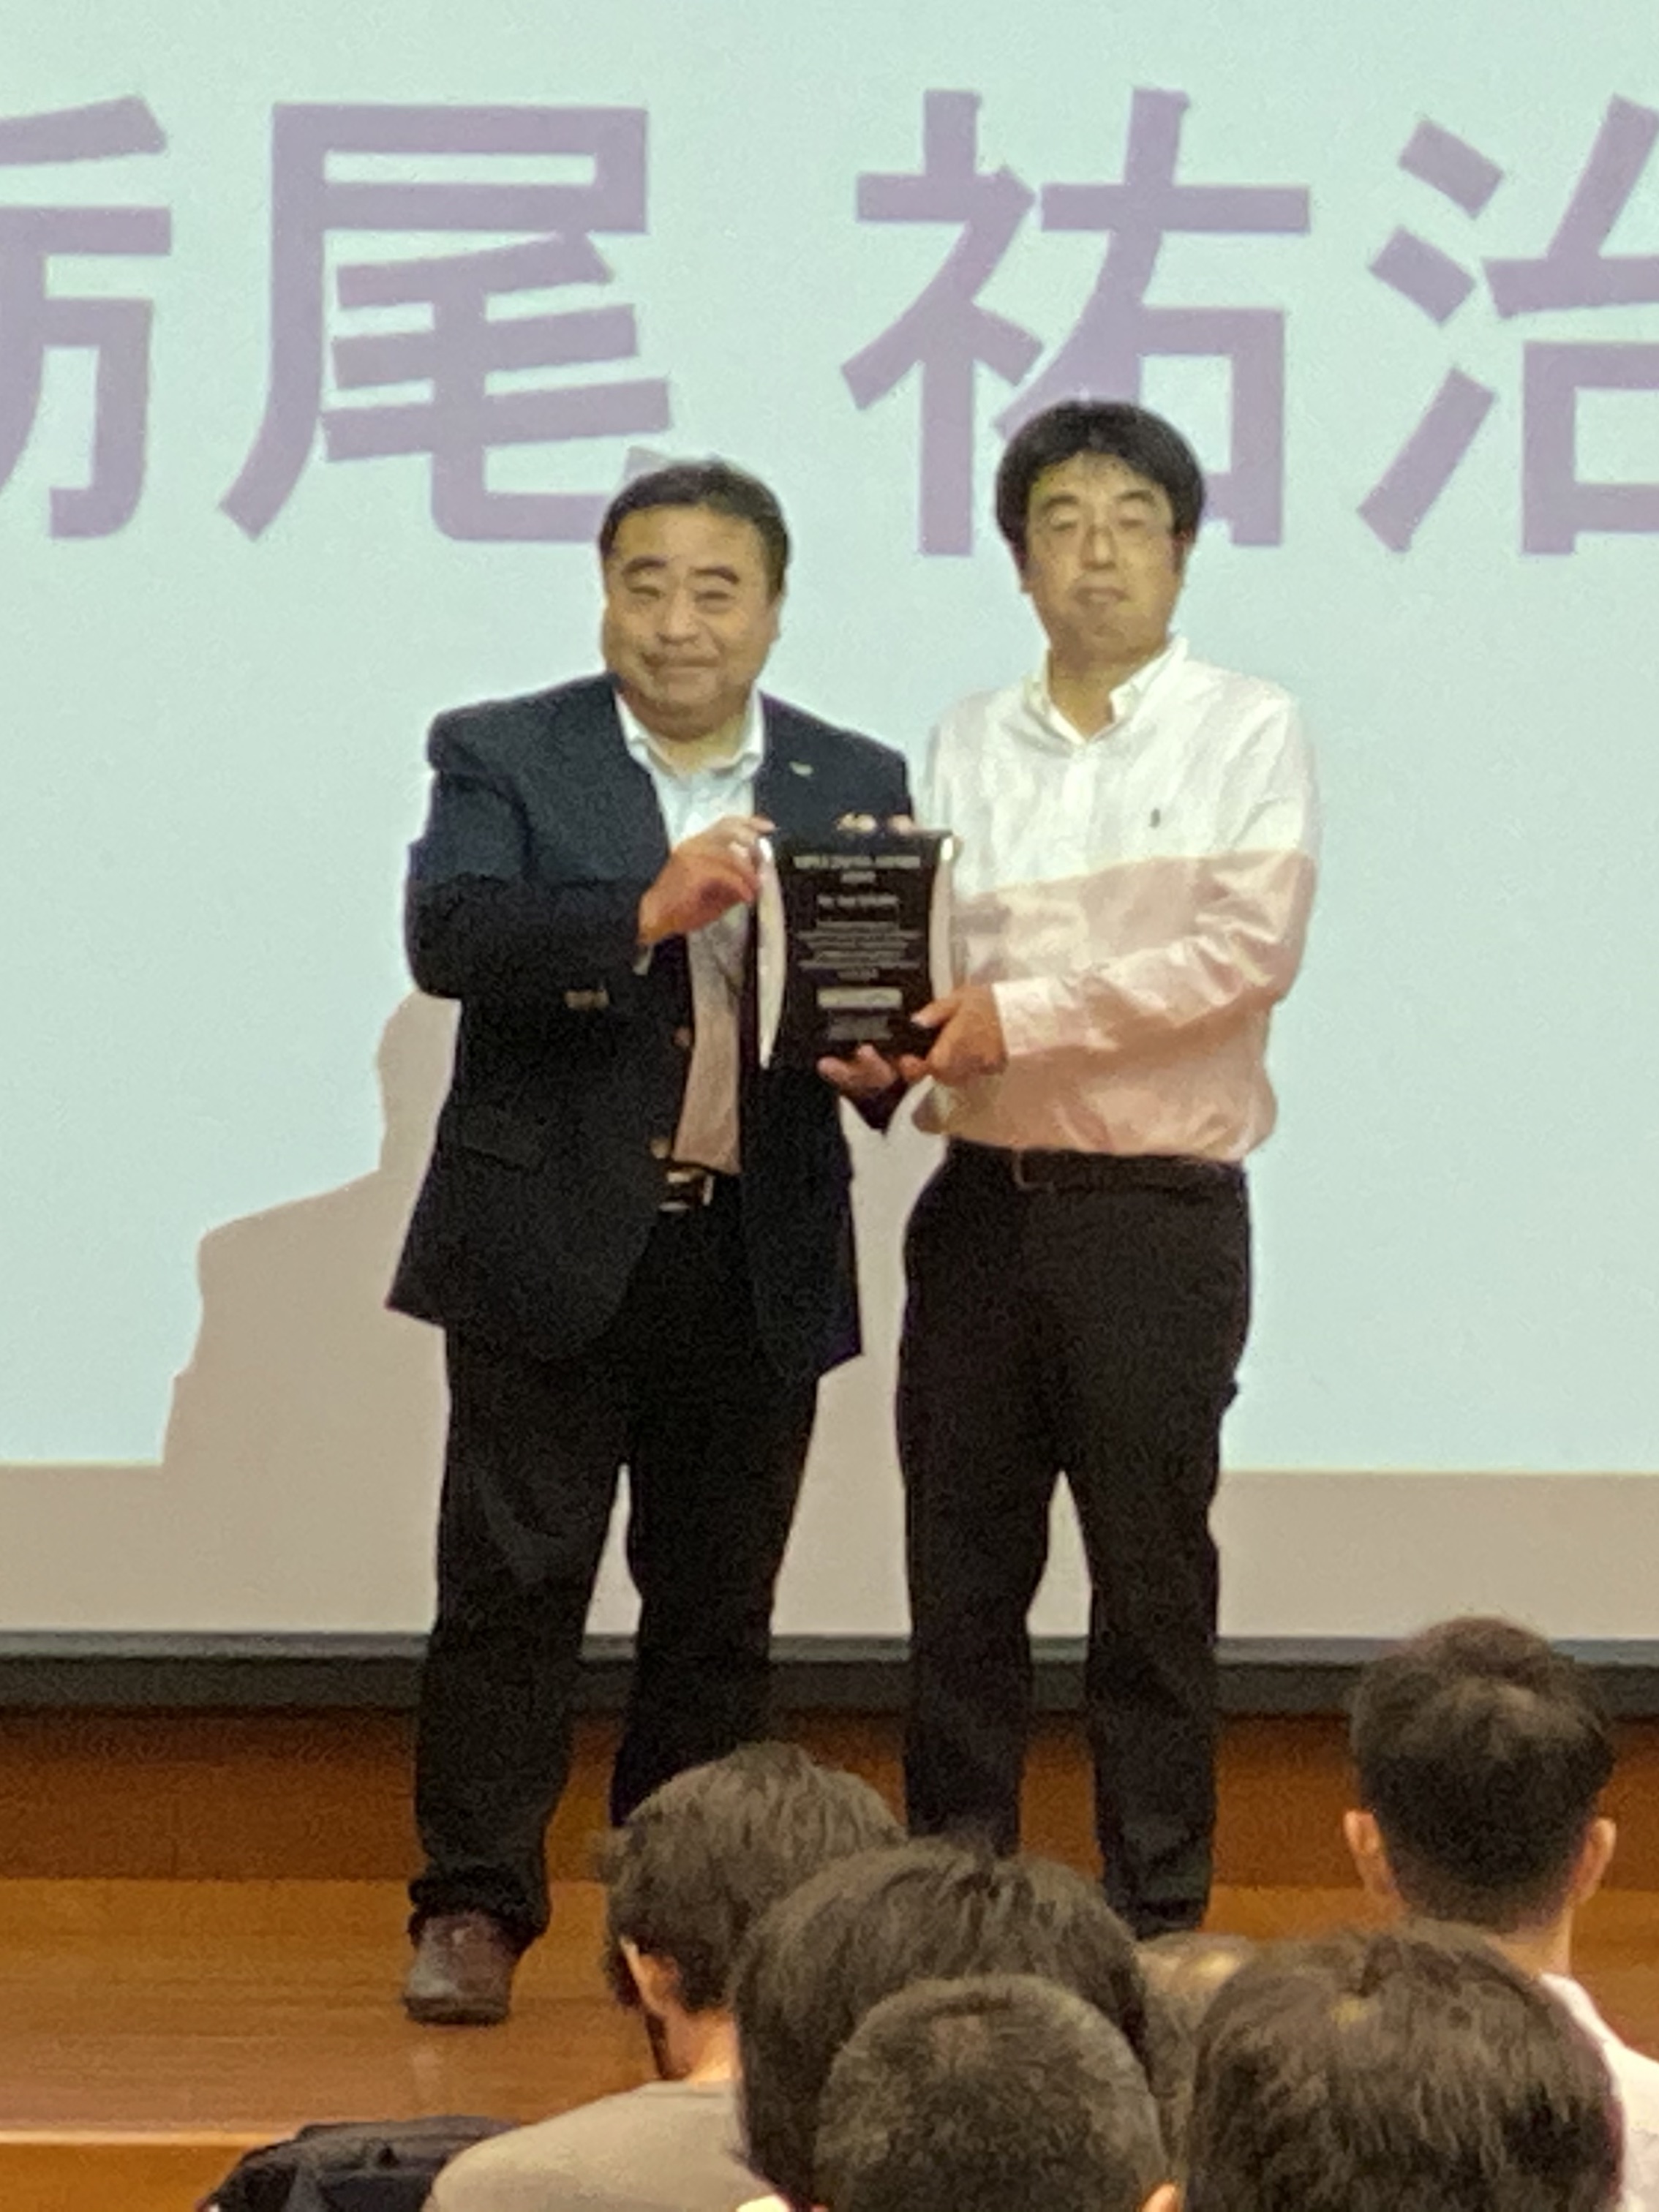 MPLS JAPAN Award 2019 winners